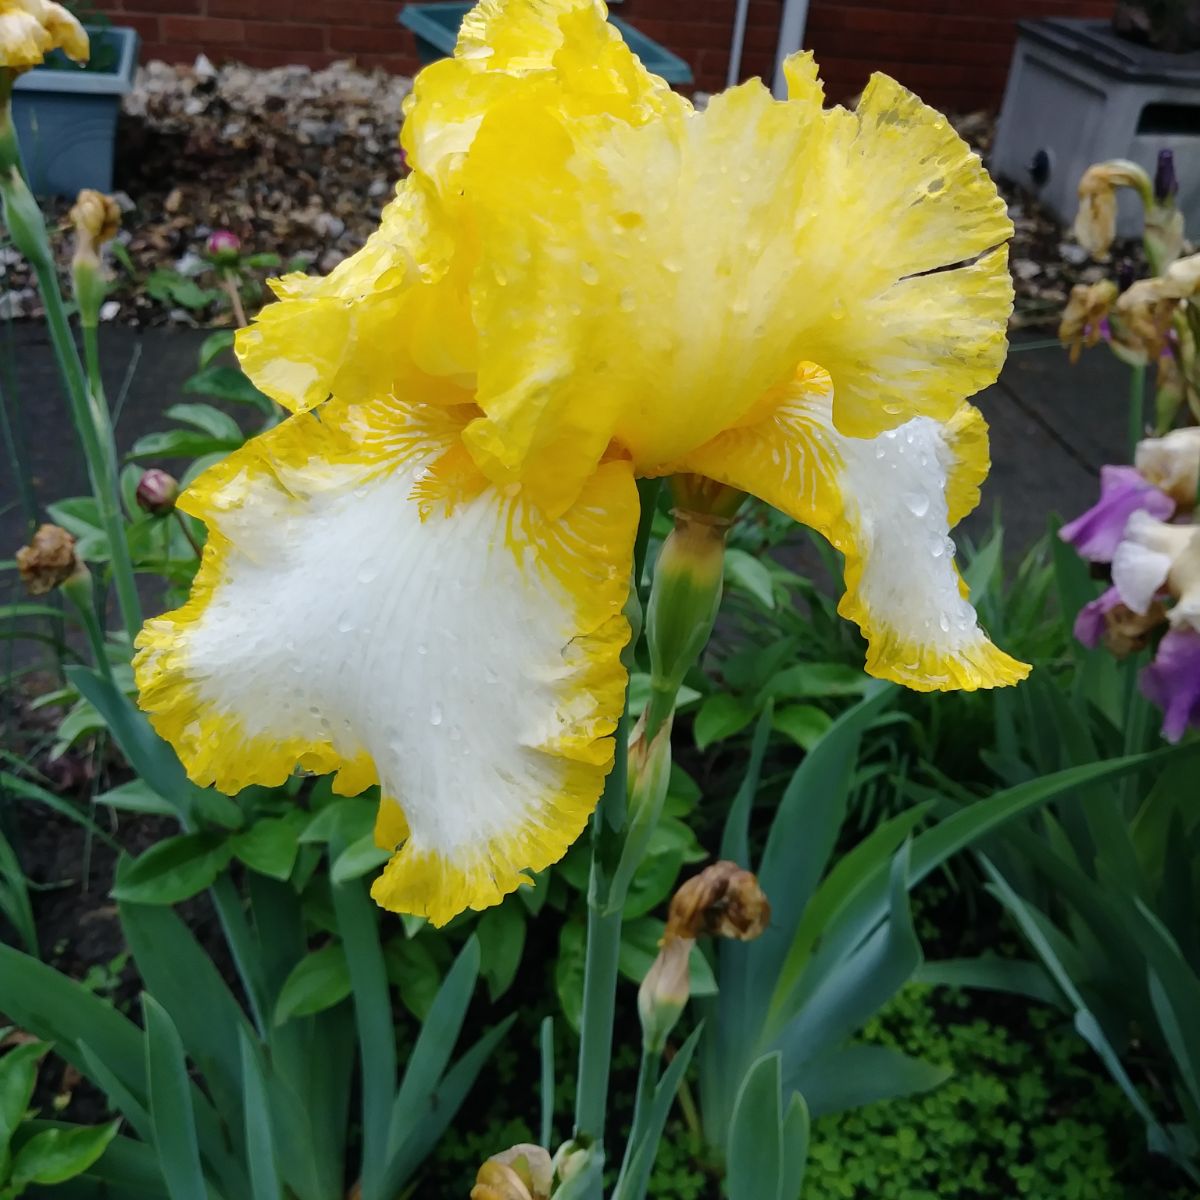 A thriving iris in good soil